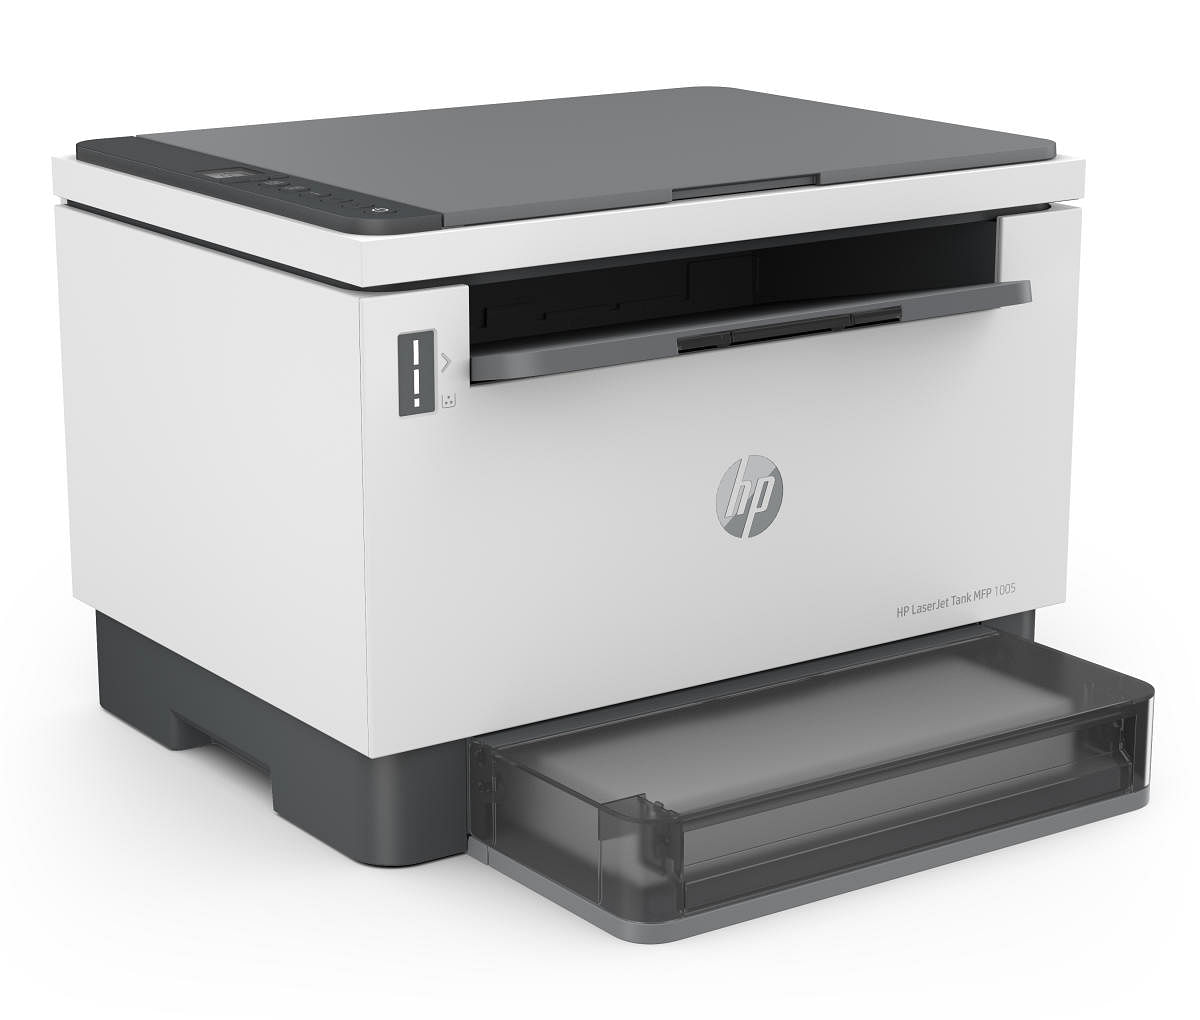 HP LaserJet Tank MFP 1005w Printer: ವೃತ್ತಿಪರರು, ಎಸ್‌ಎಂಬಿಗಳಿಗೆ ಸೂಕ್ತ